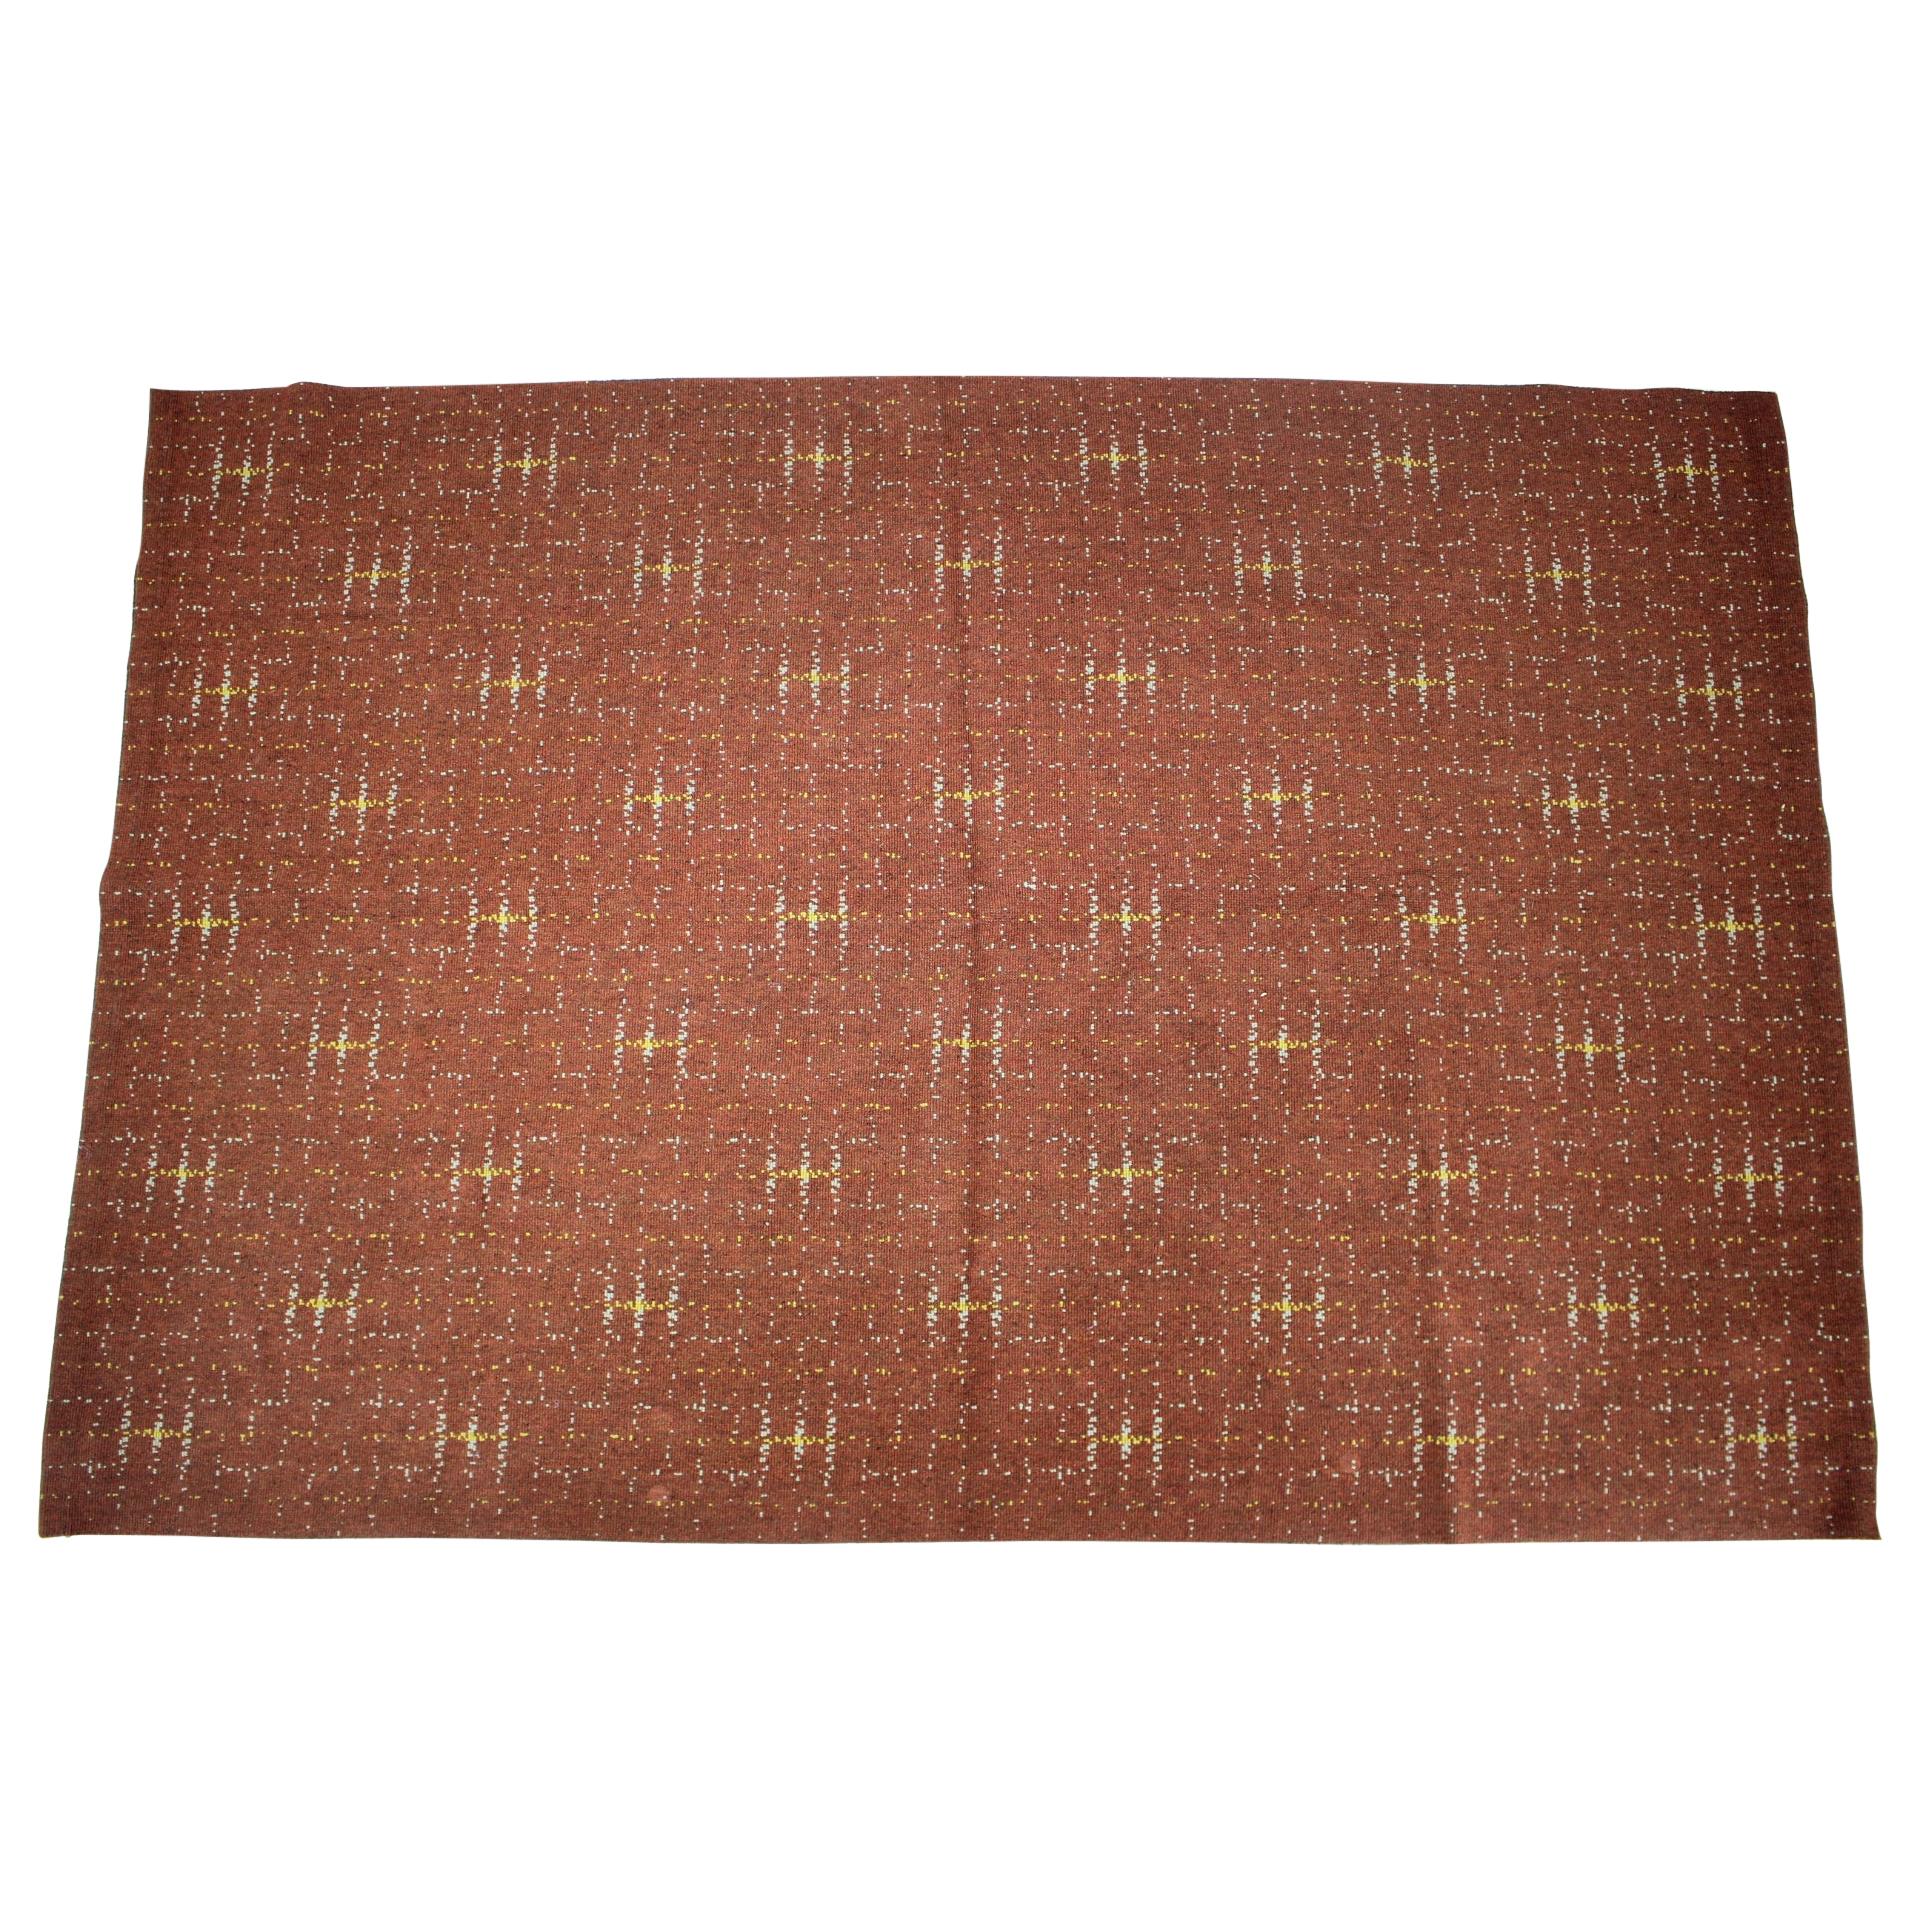 Original Midcentury Abstract Design Carpet / Rug, 1950s For Sale